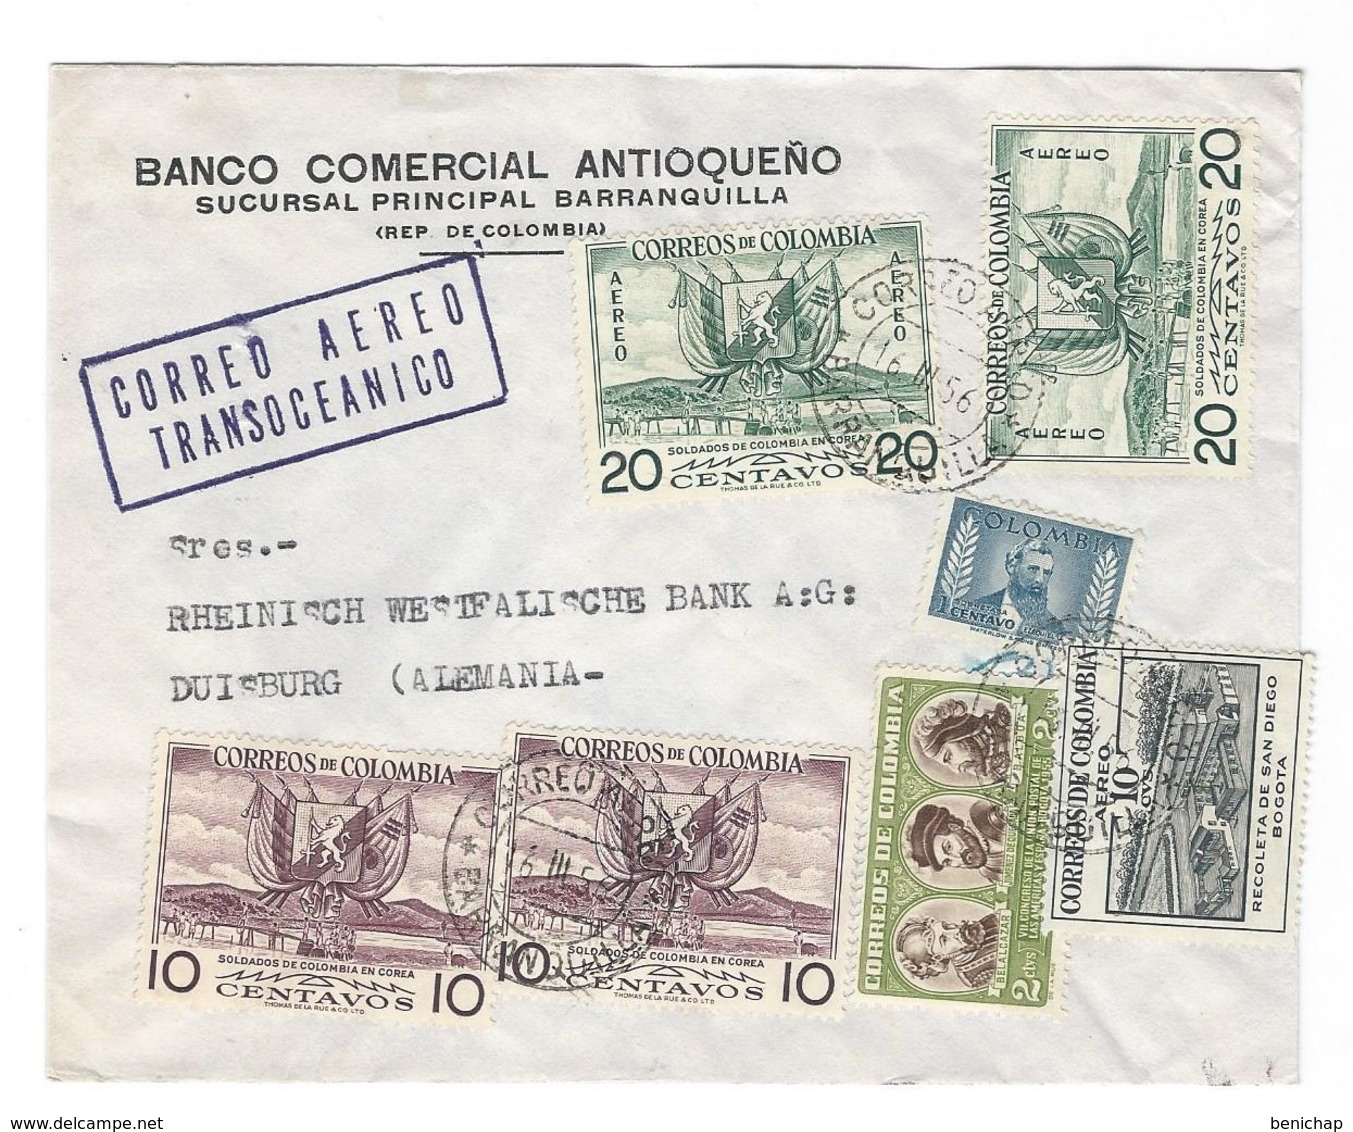 COVER CORREO COLOMBIA - AERO TRANSOCEANICO - BANCO COMERCIAL ANTIOQUENO - BARRANQUILLA - DUISBURG - GERMANY. - Colombie